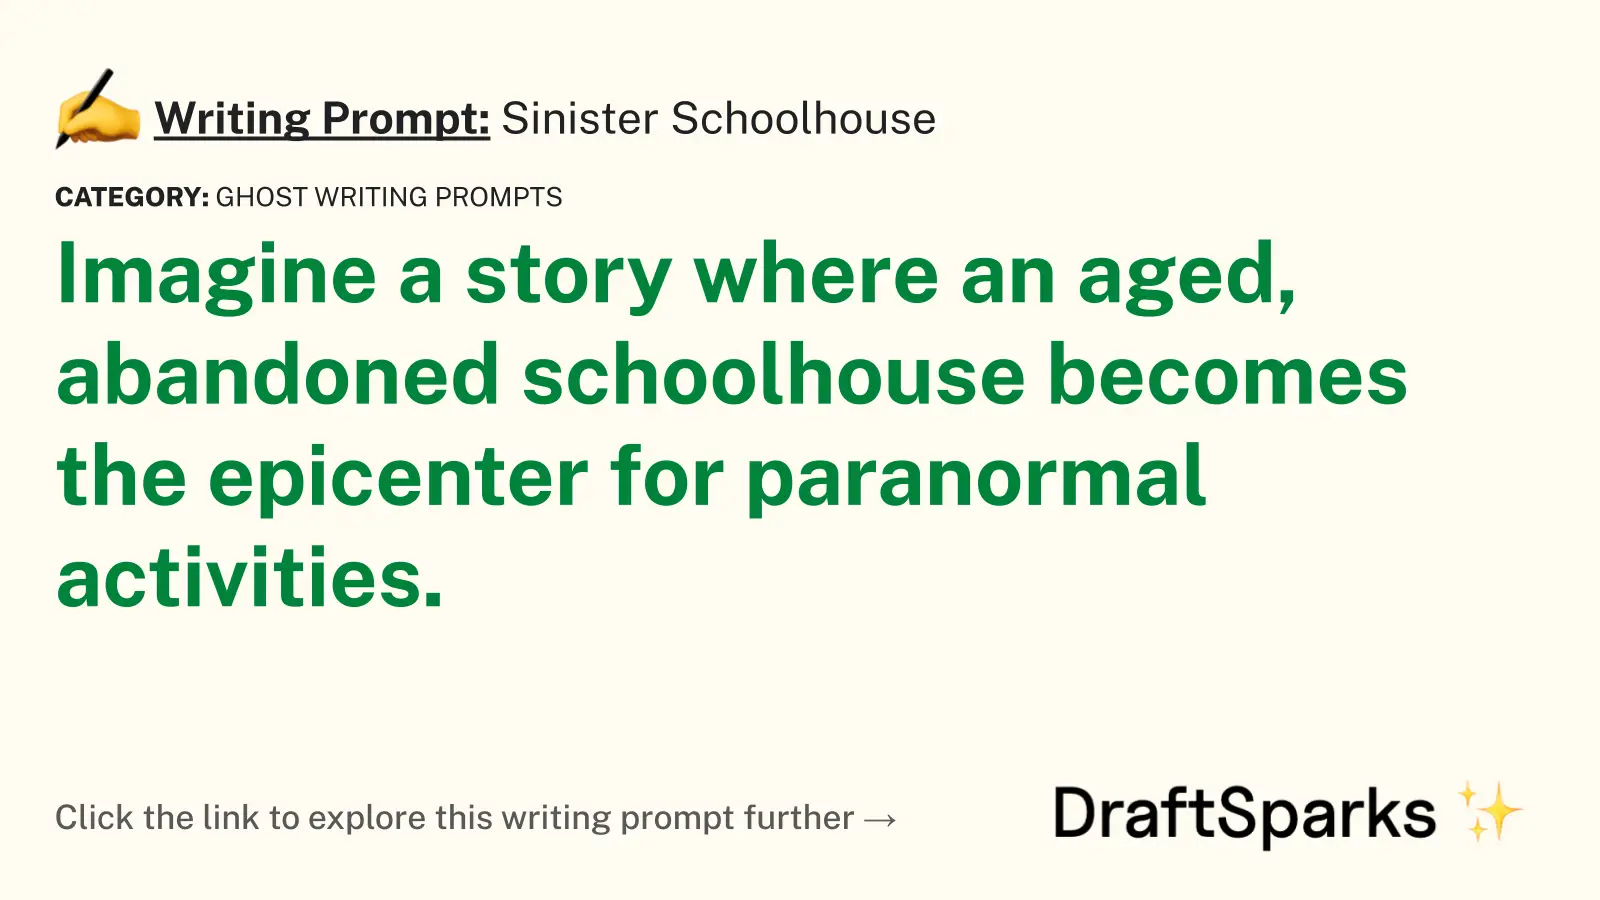 Sinister Schoolhouse